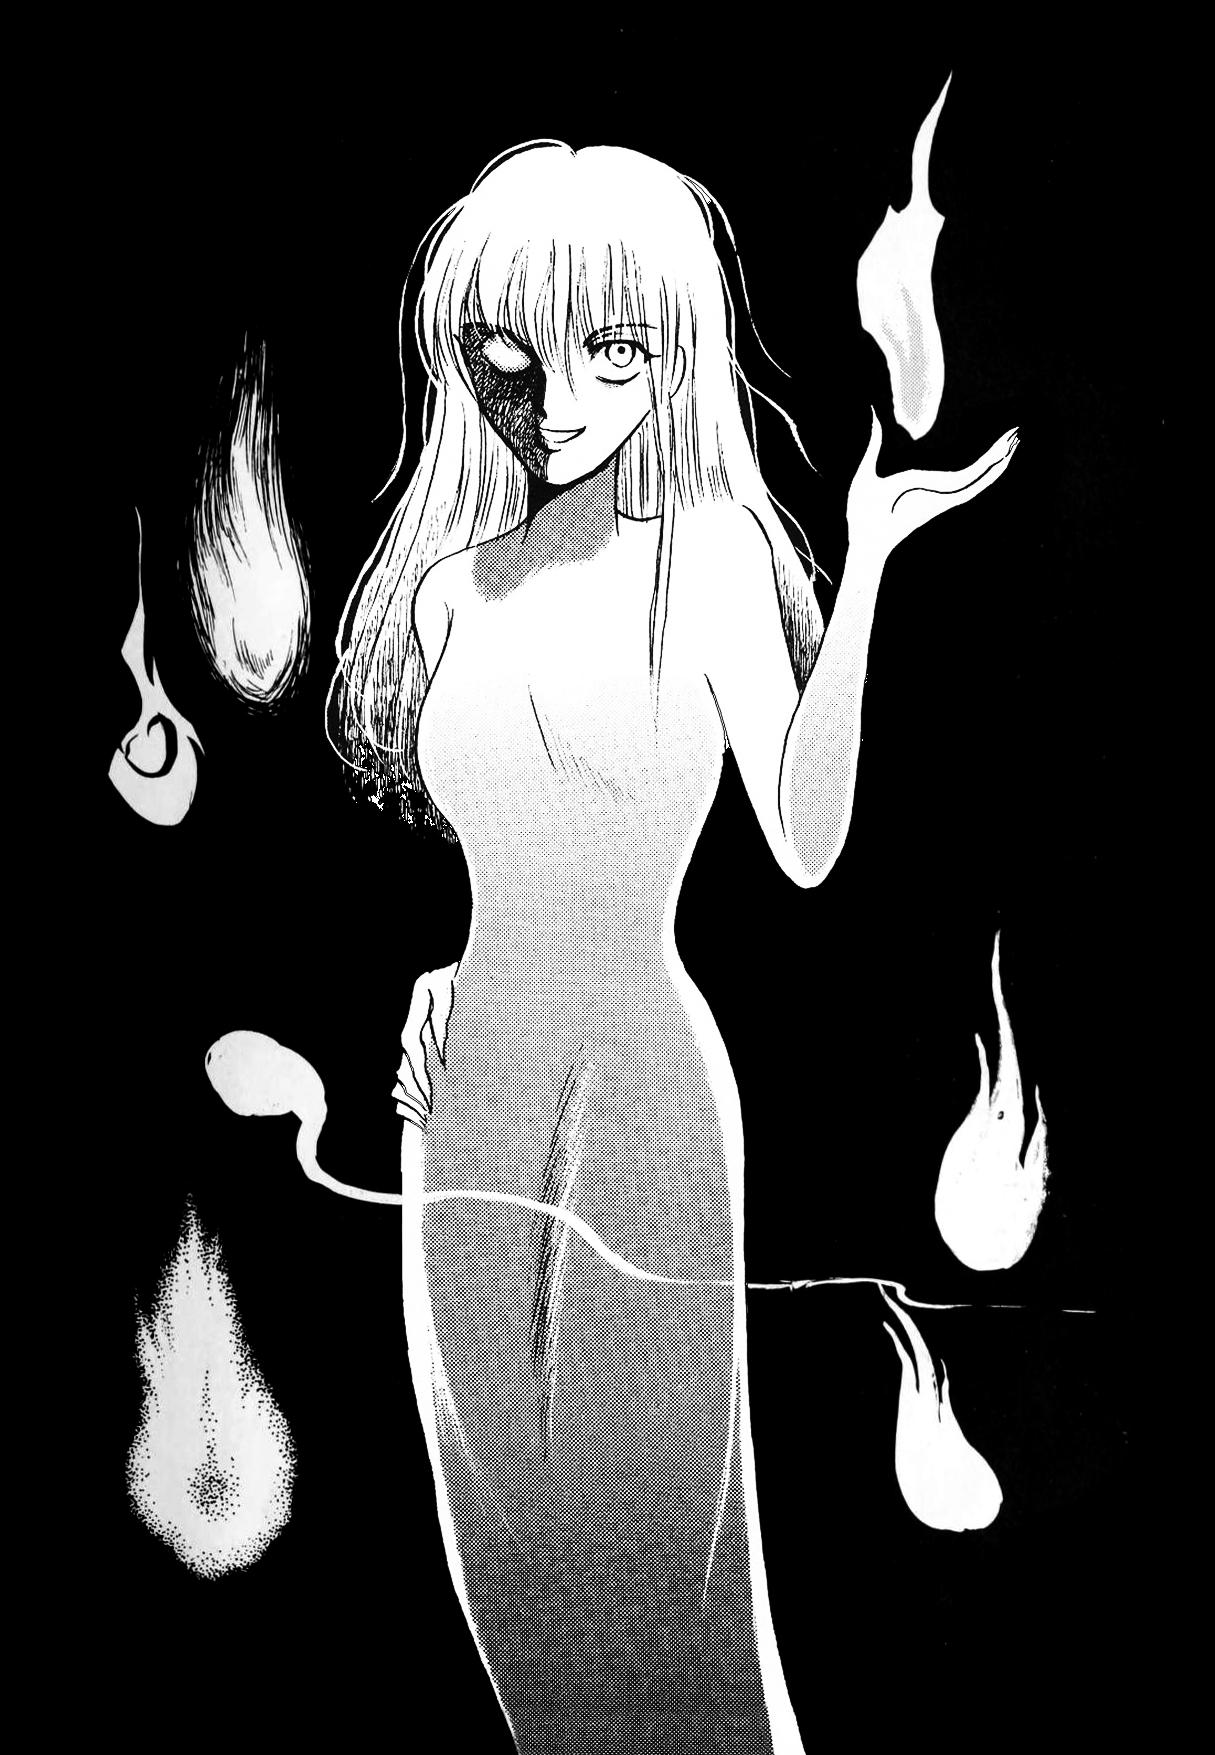 How to Draw Manga Vol. 24, Occult & Horror by Hikaru Hayashi 56